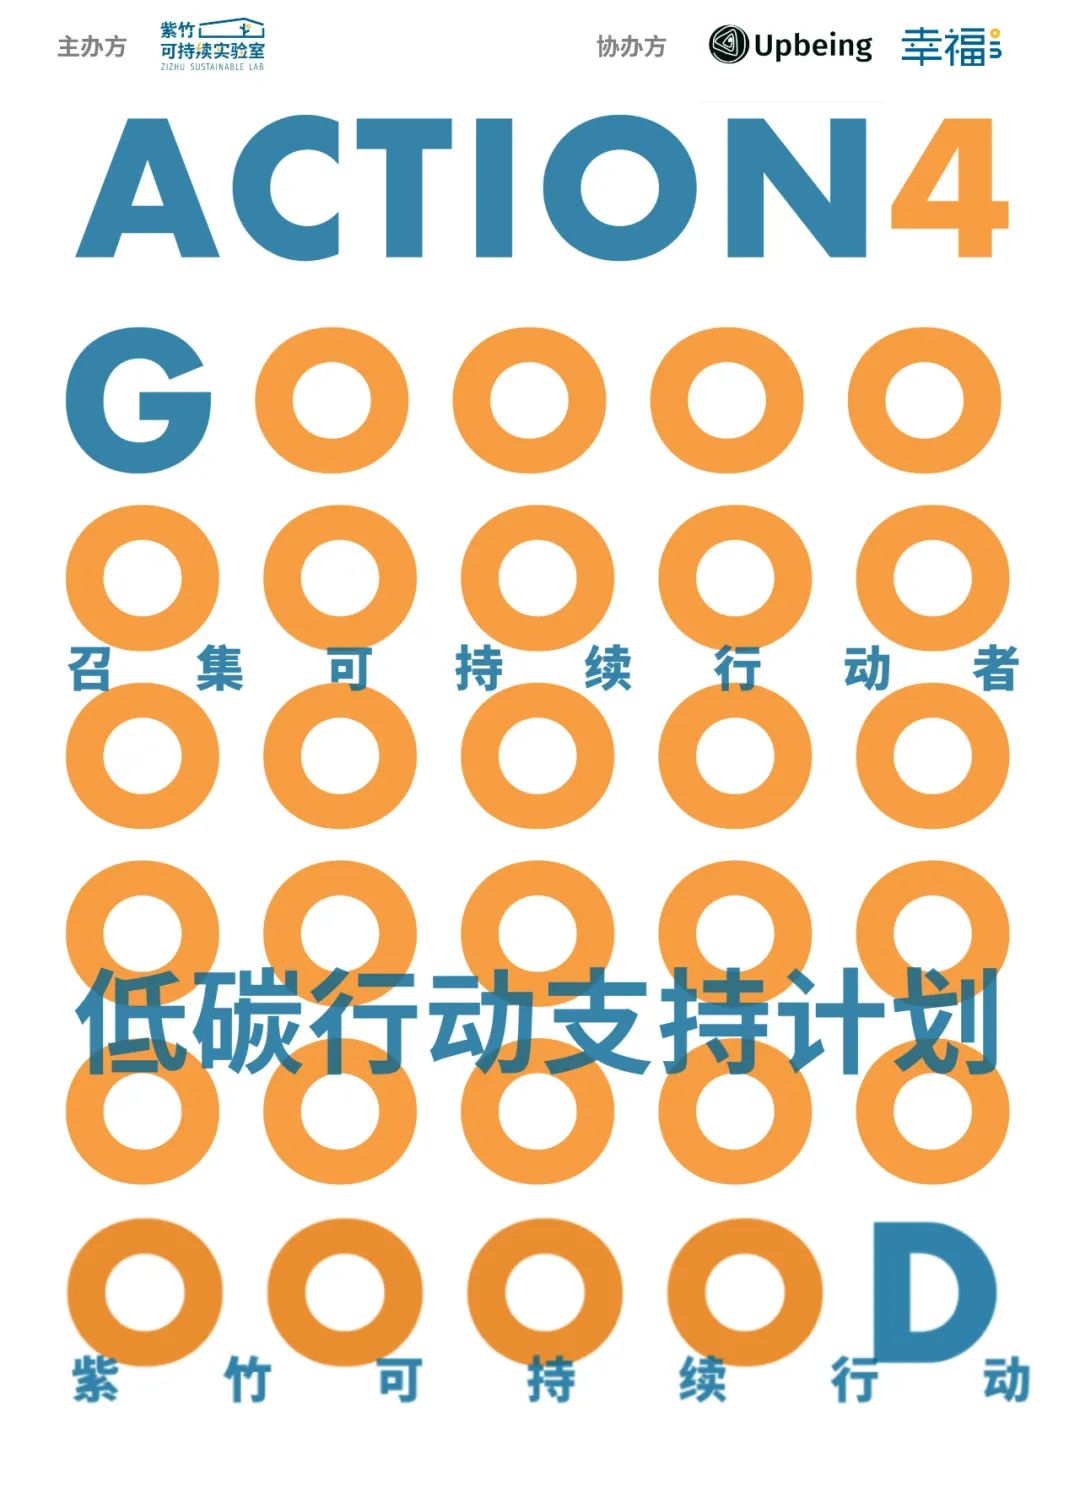 Action4Good 第三季：低碳行动支持 | 入选项目公布